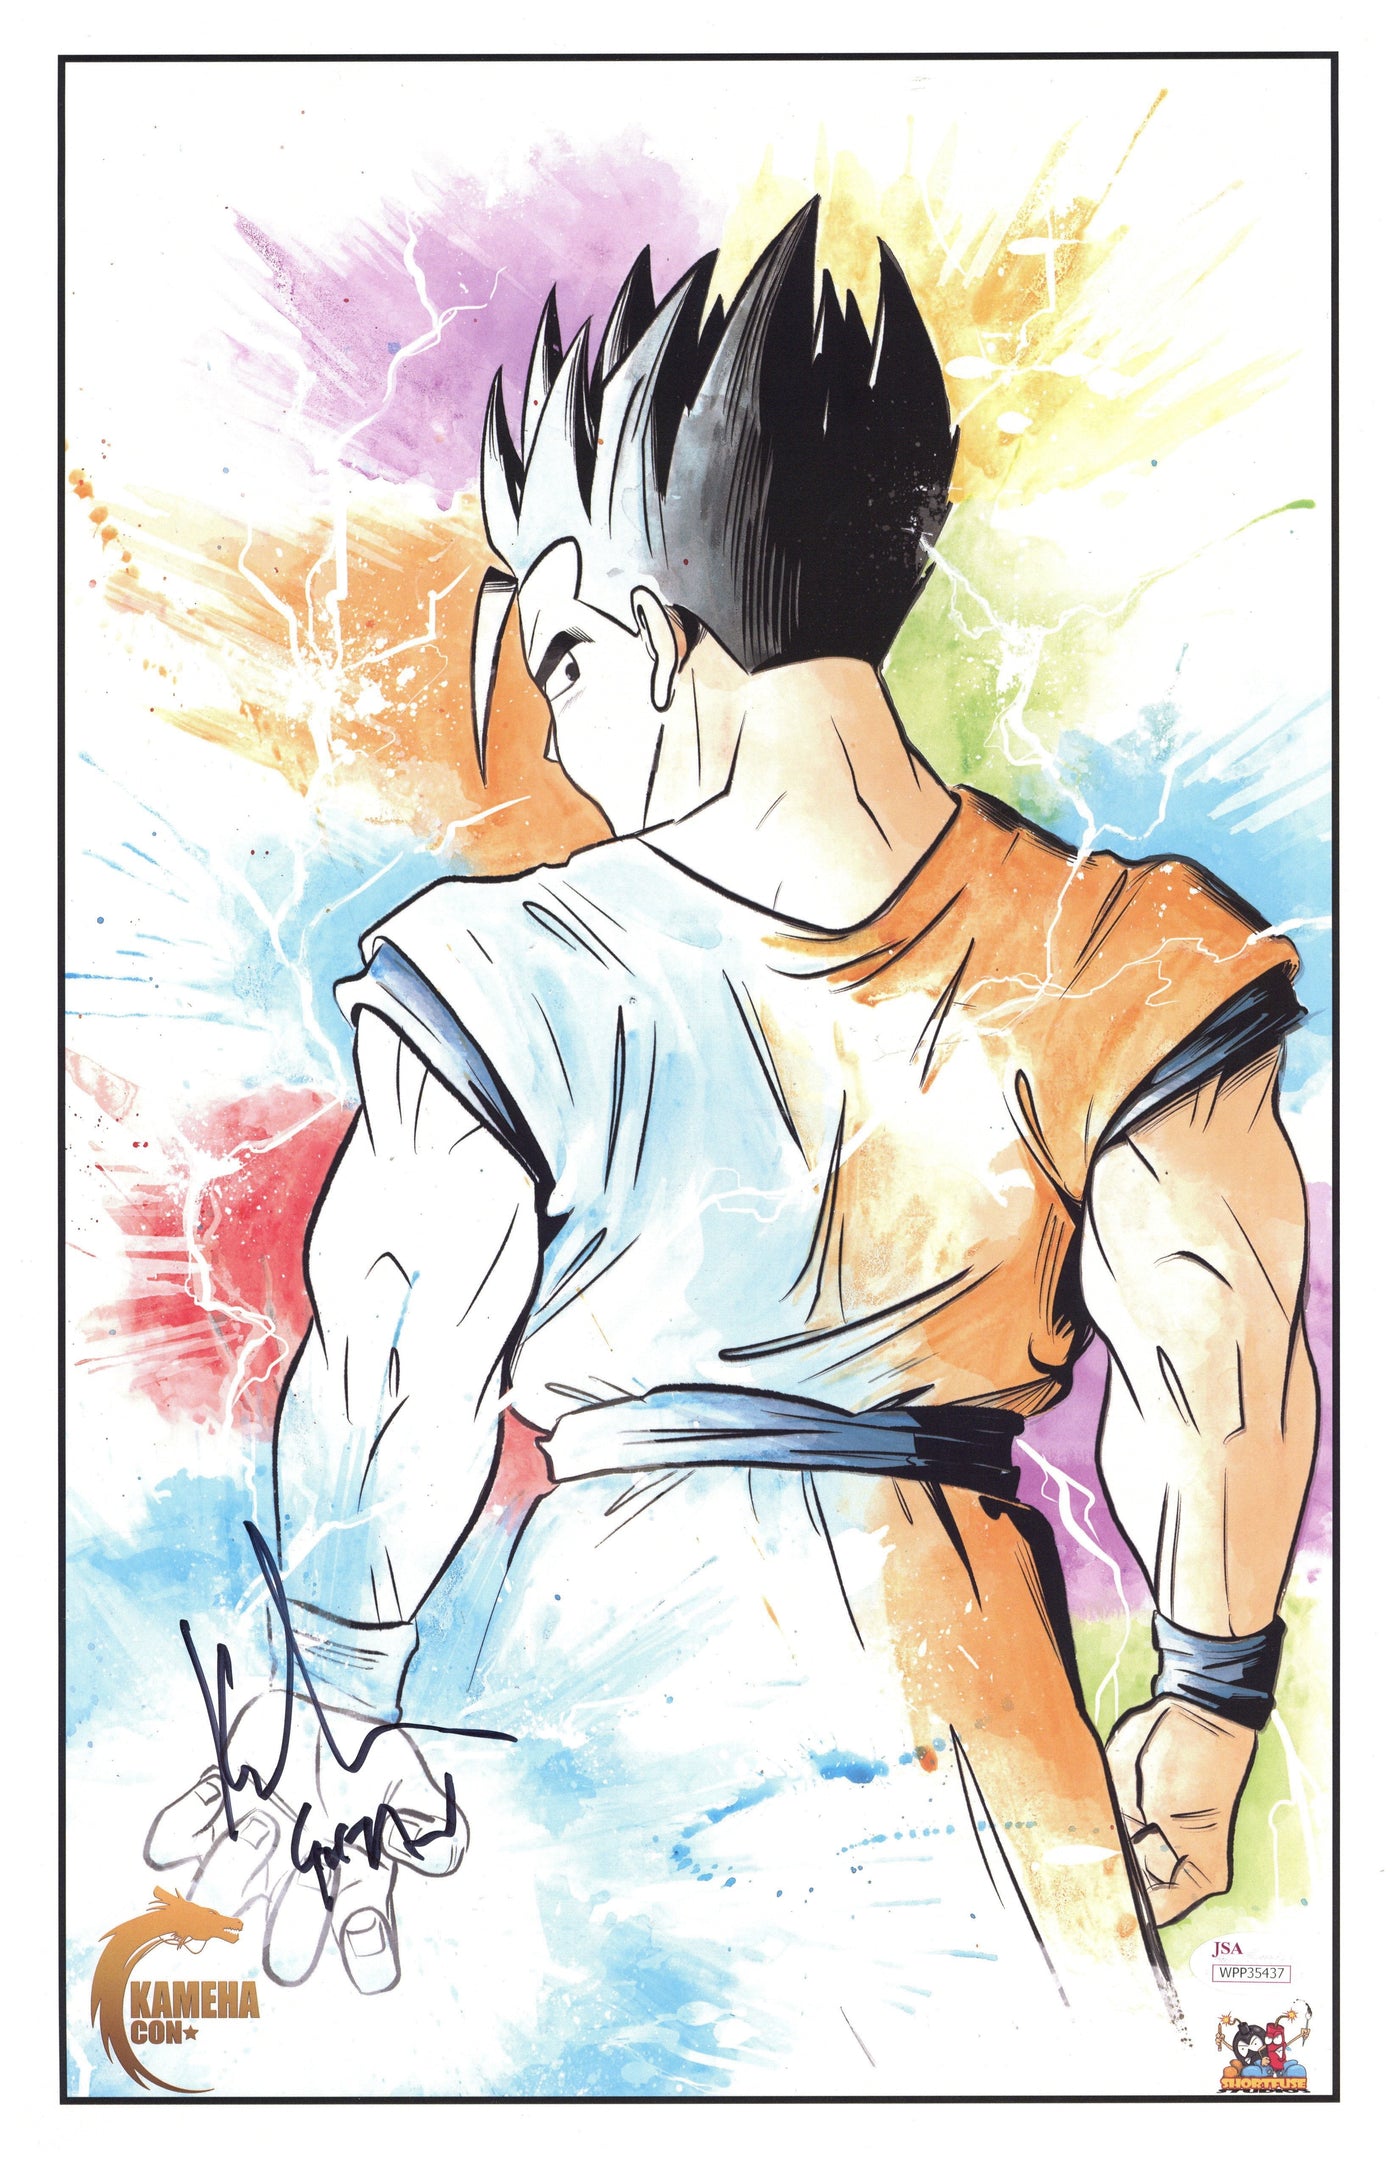 Kyle Hebert Signed 11x17 Art Print Dragon Ball Z Gohan Autographed JSA COA